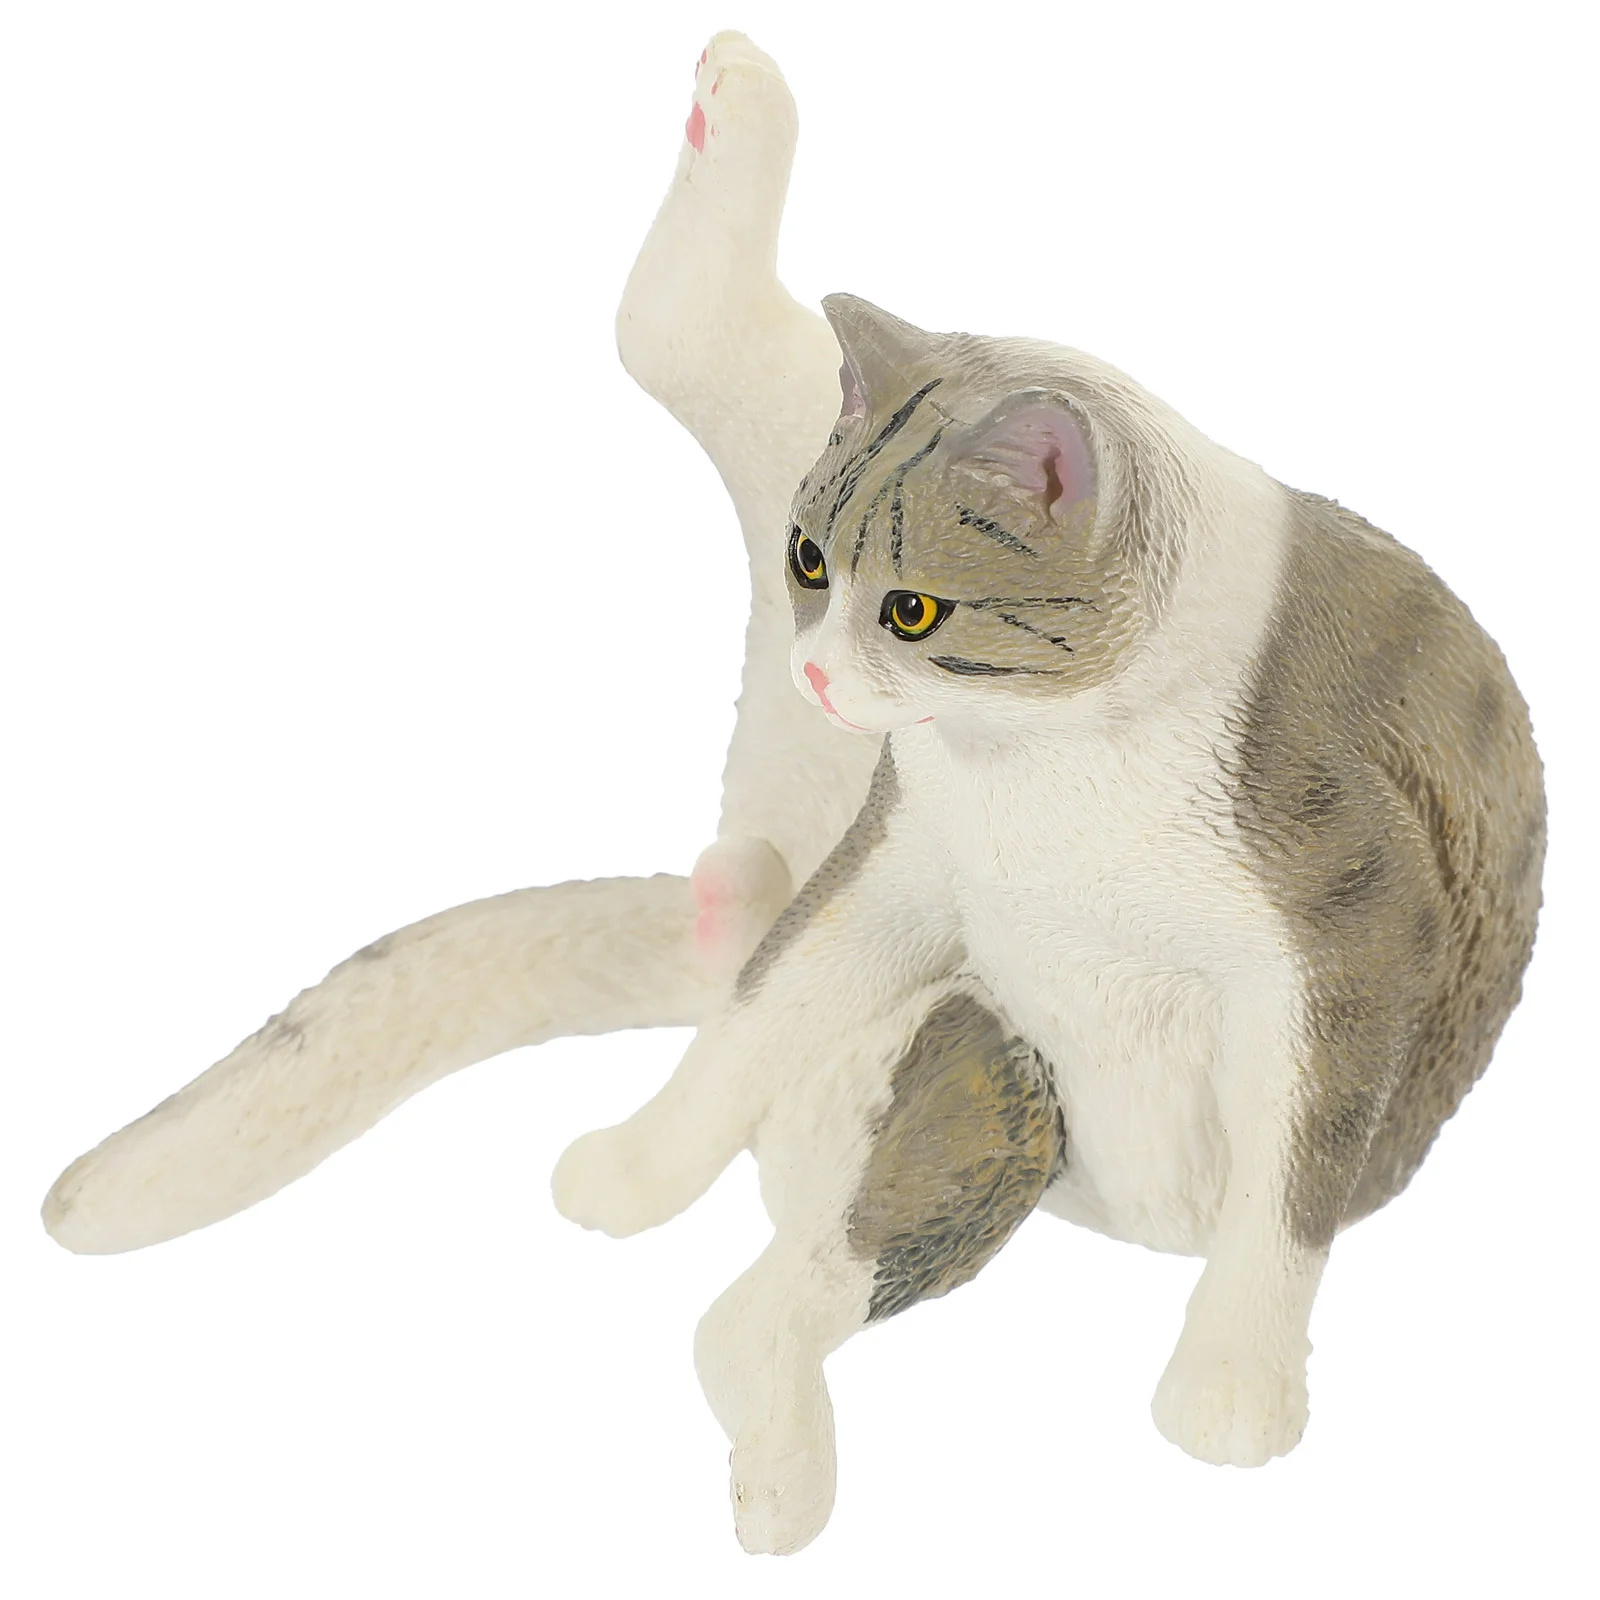 

Cute Cat Figurine Small Cat Model Realistic Kitten Animal Statues Ornament